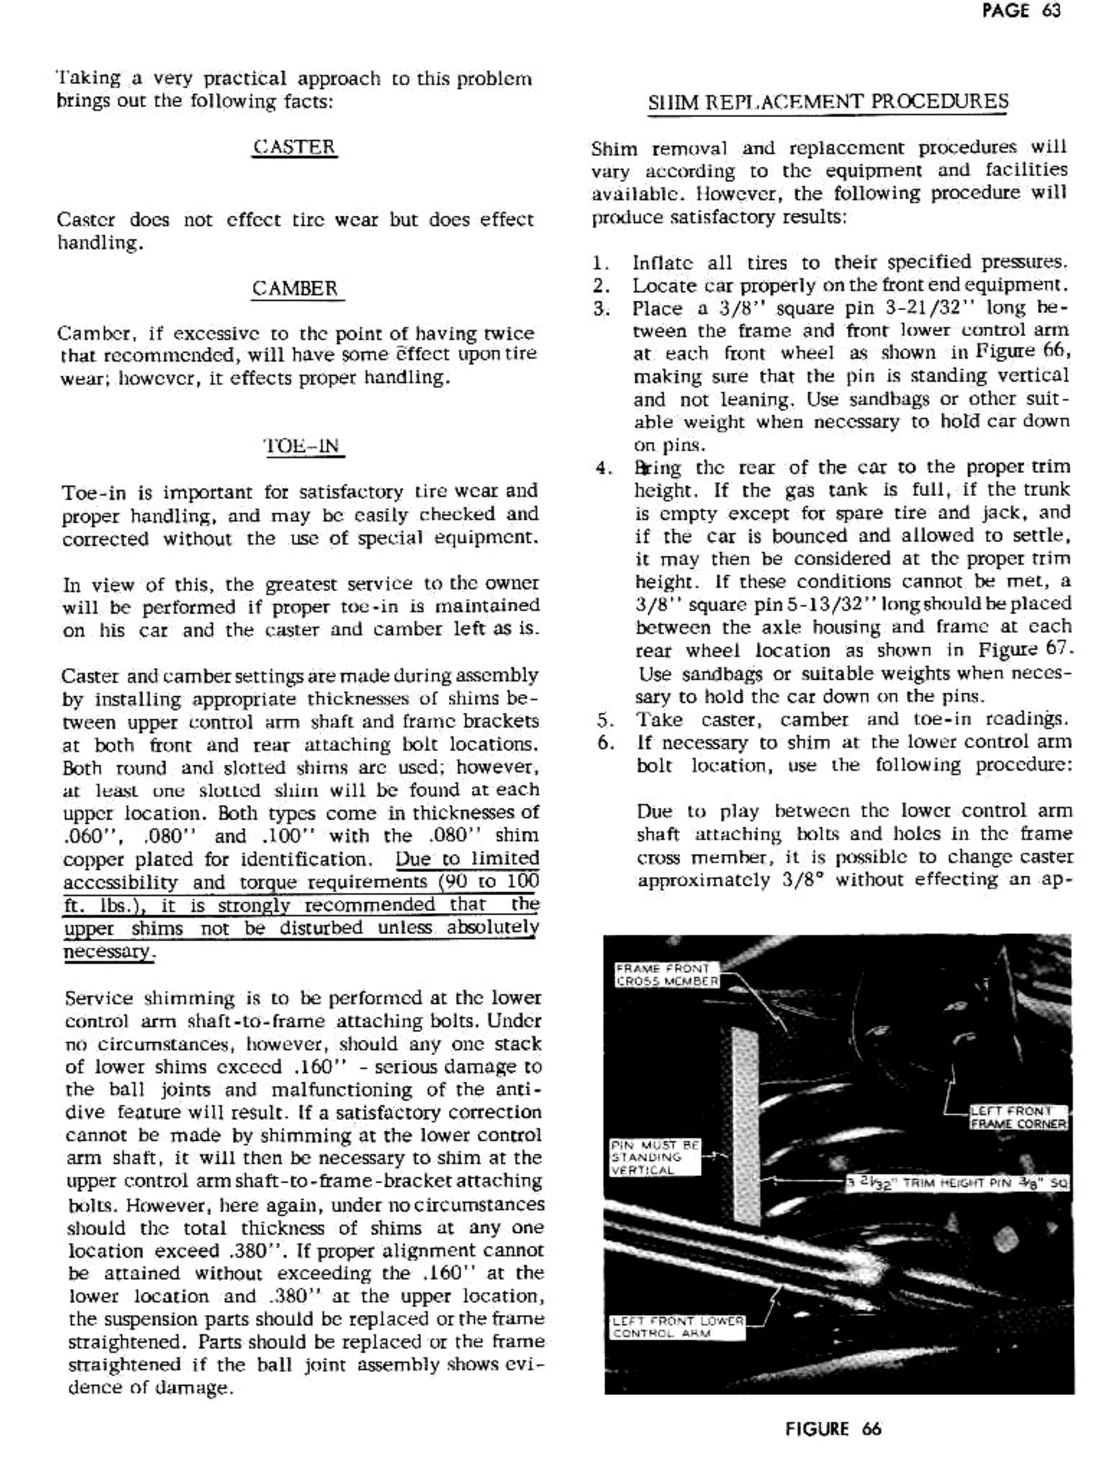 n_1957 Buick Product Service  Bulletins-068-068.jpg